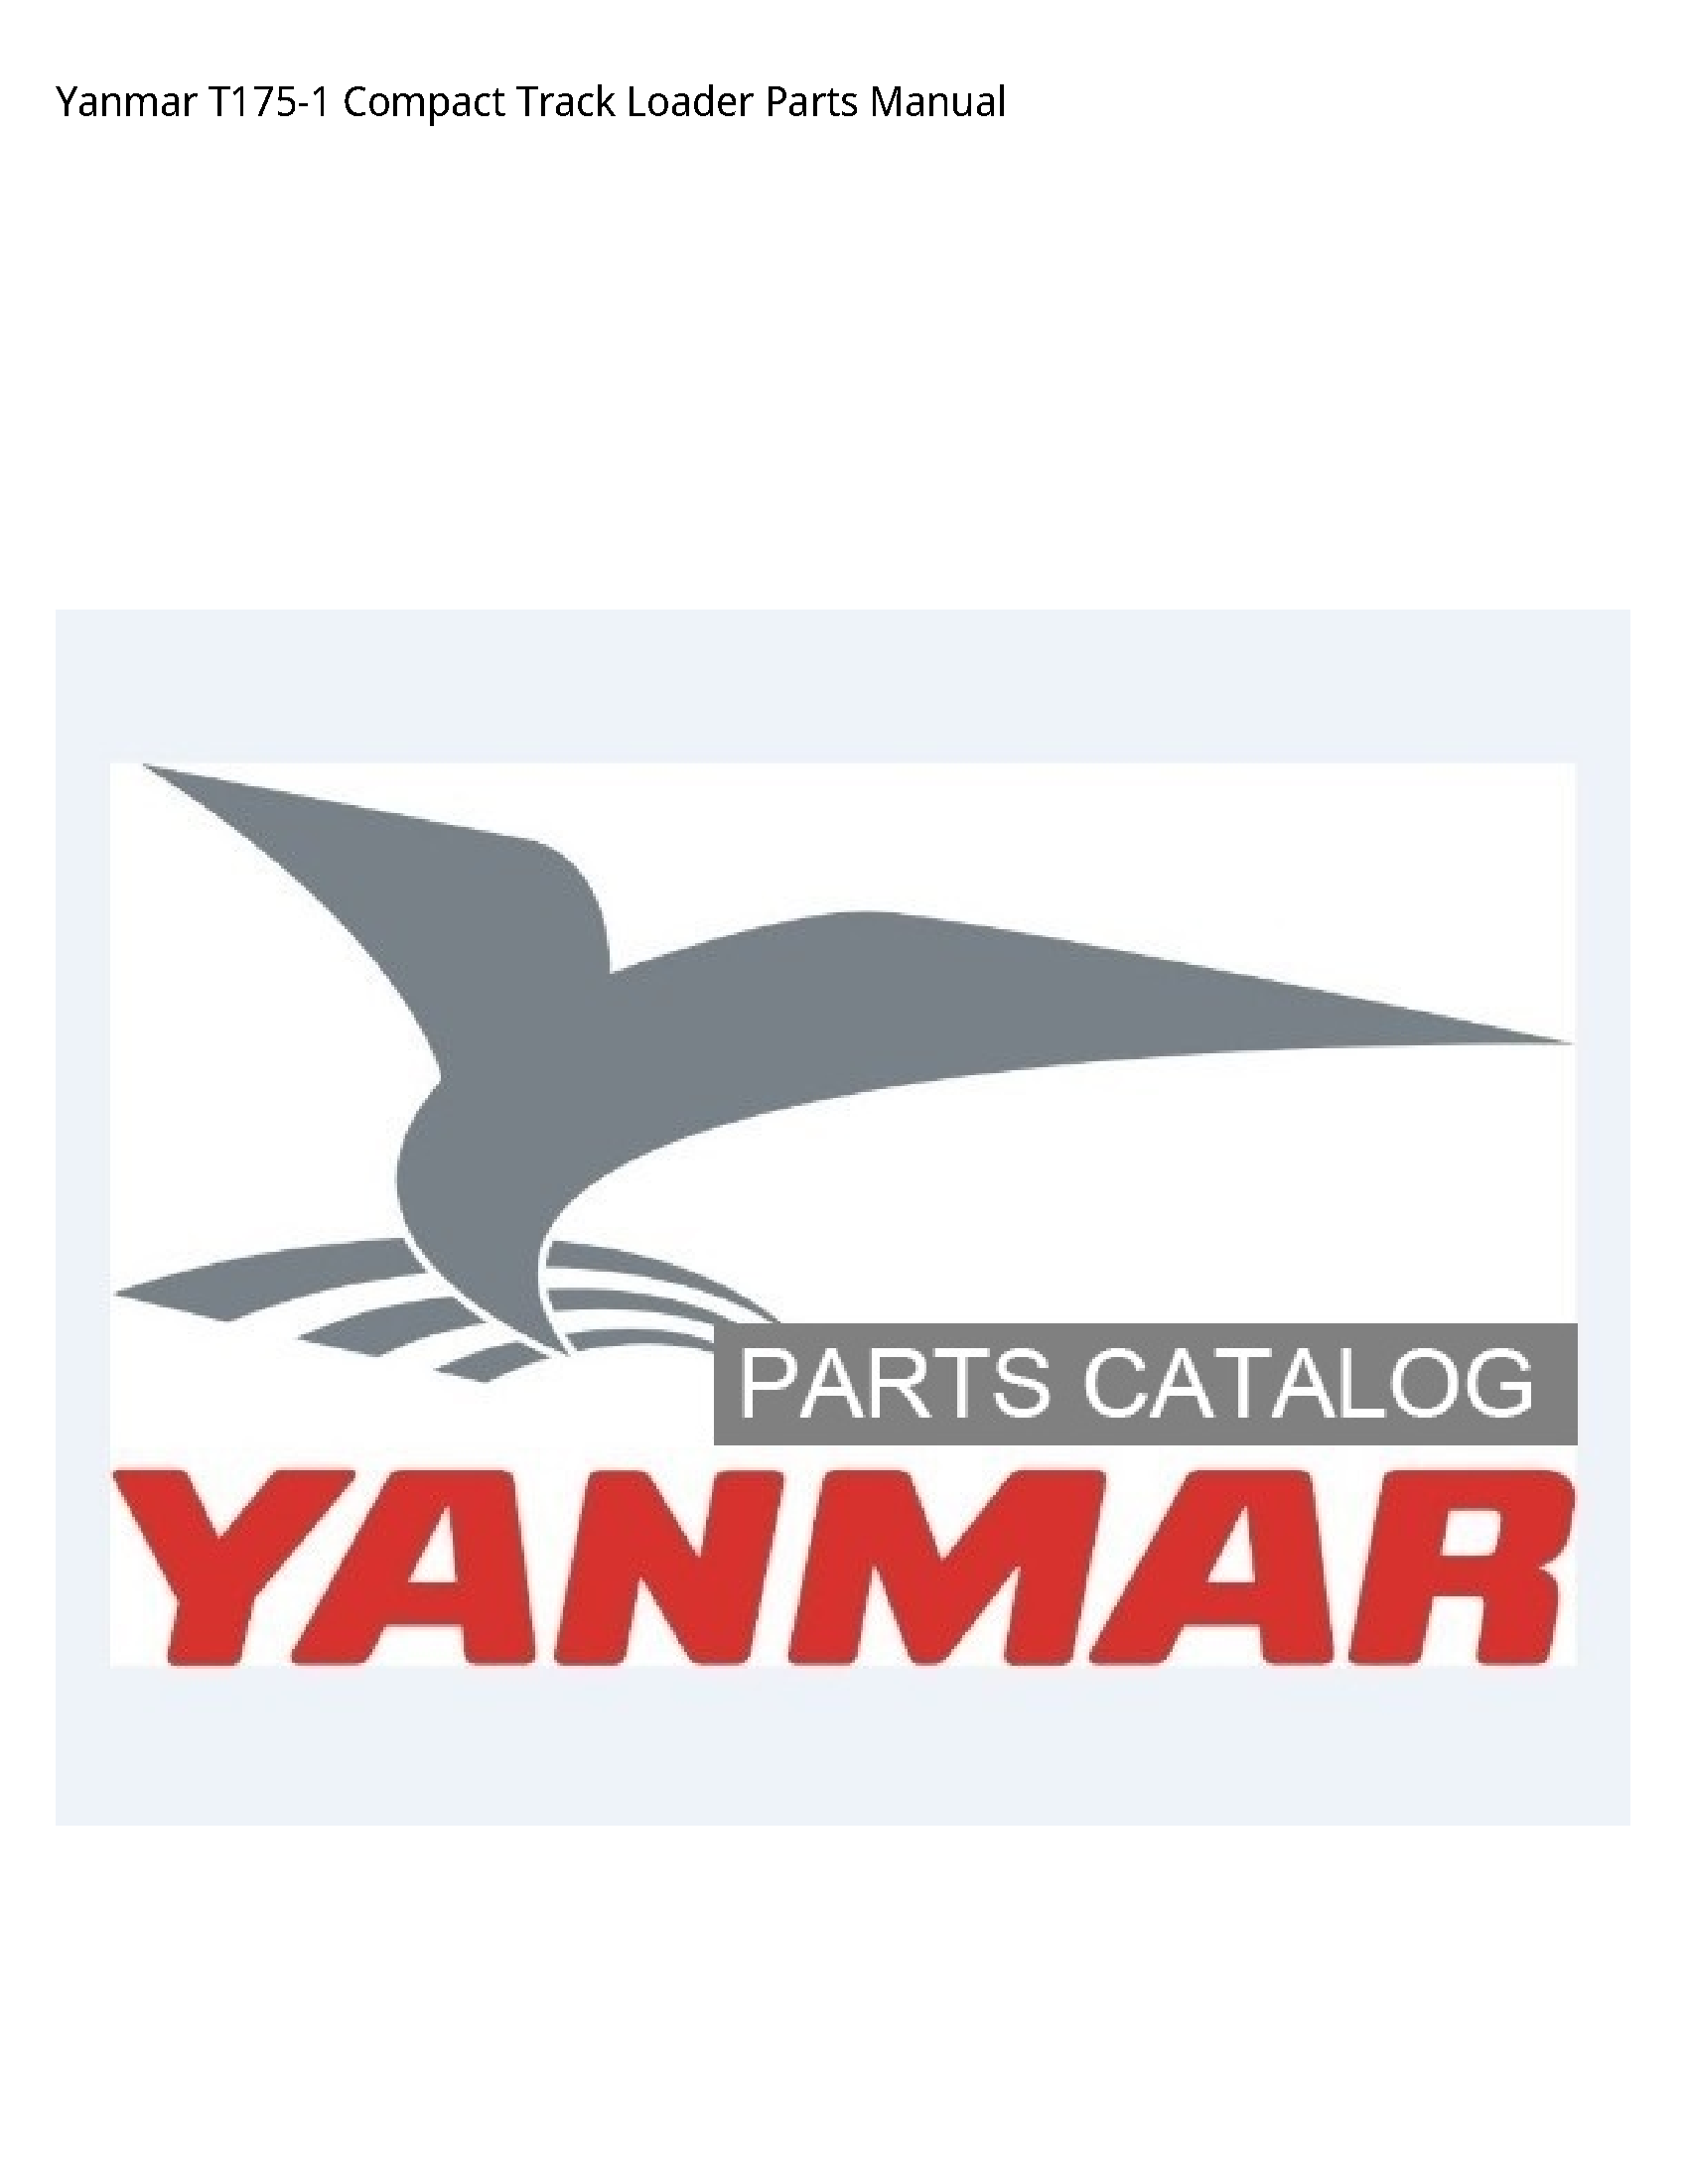 Yanmar T175-1 Compact Track Loader Parts manual